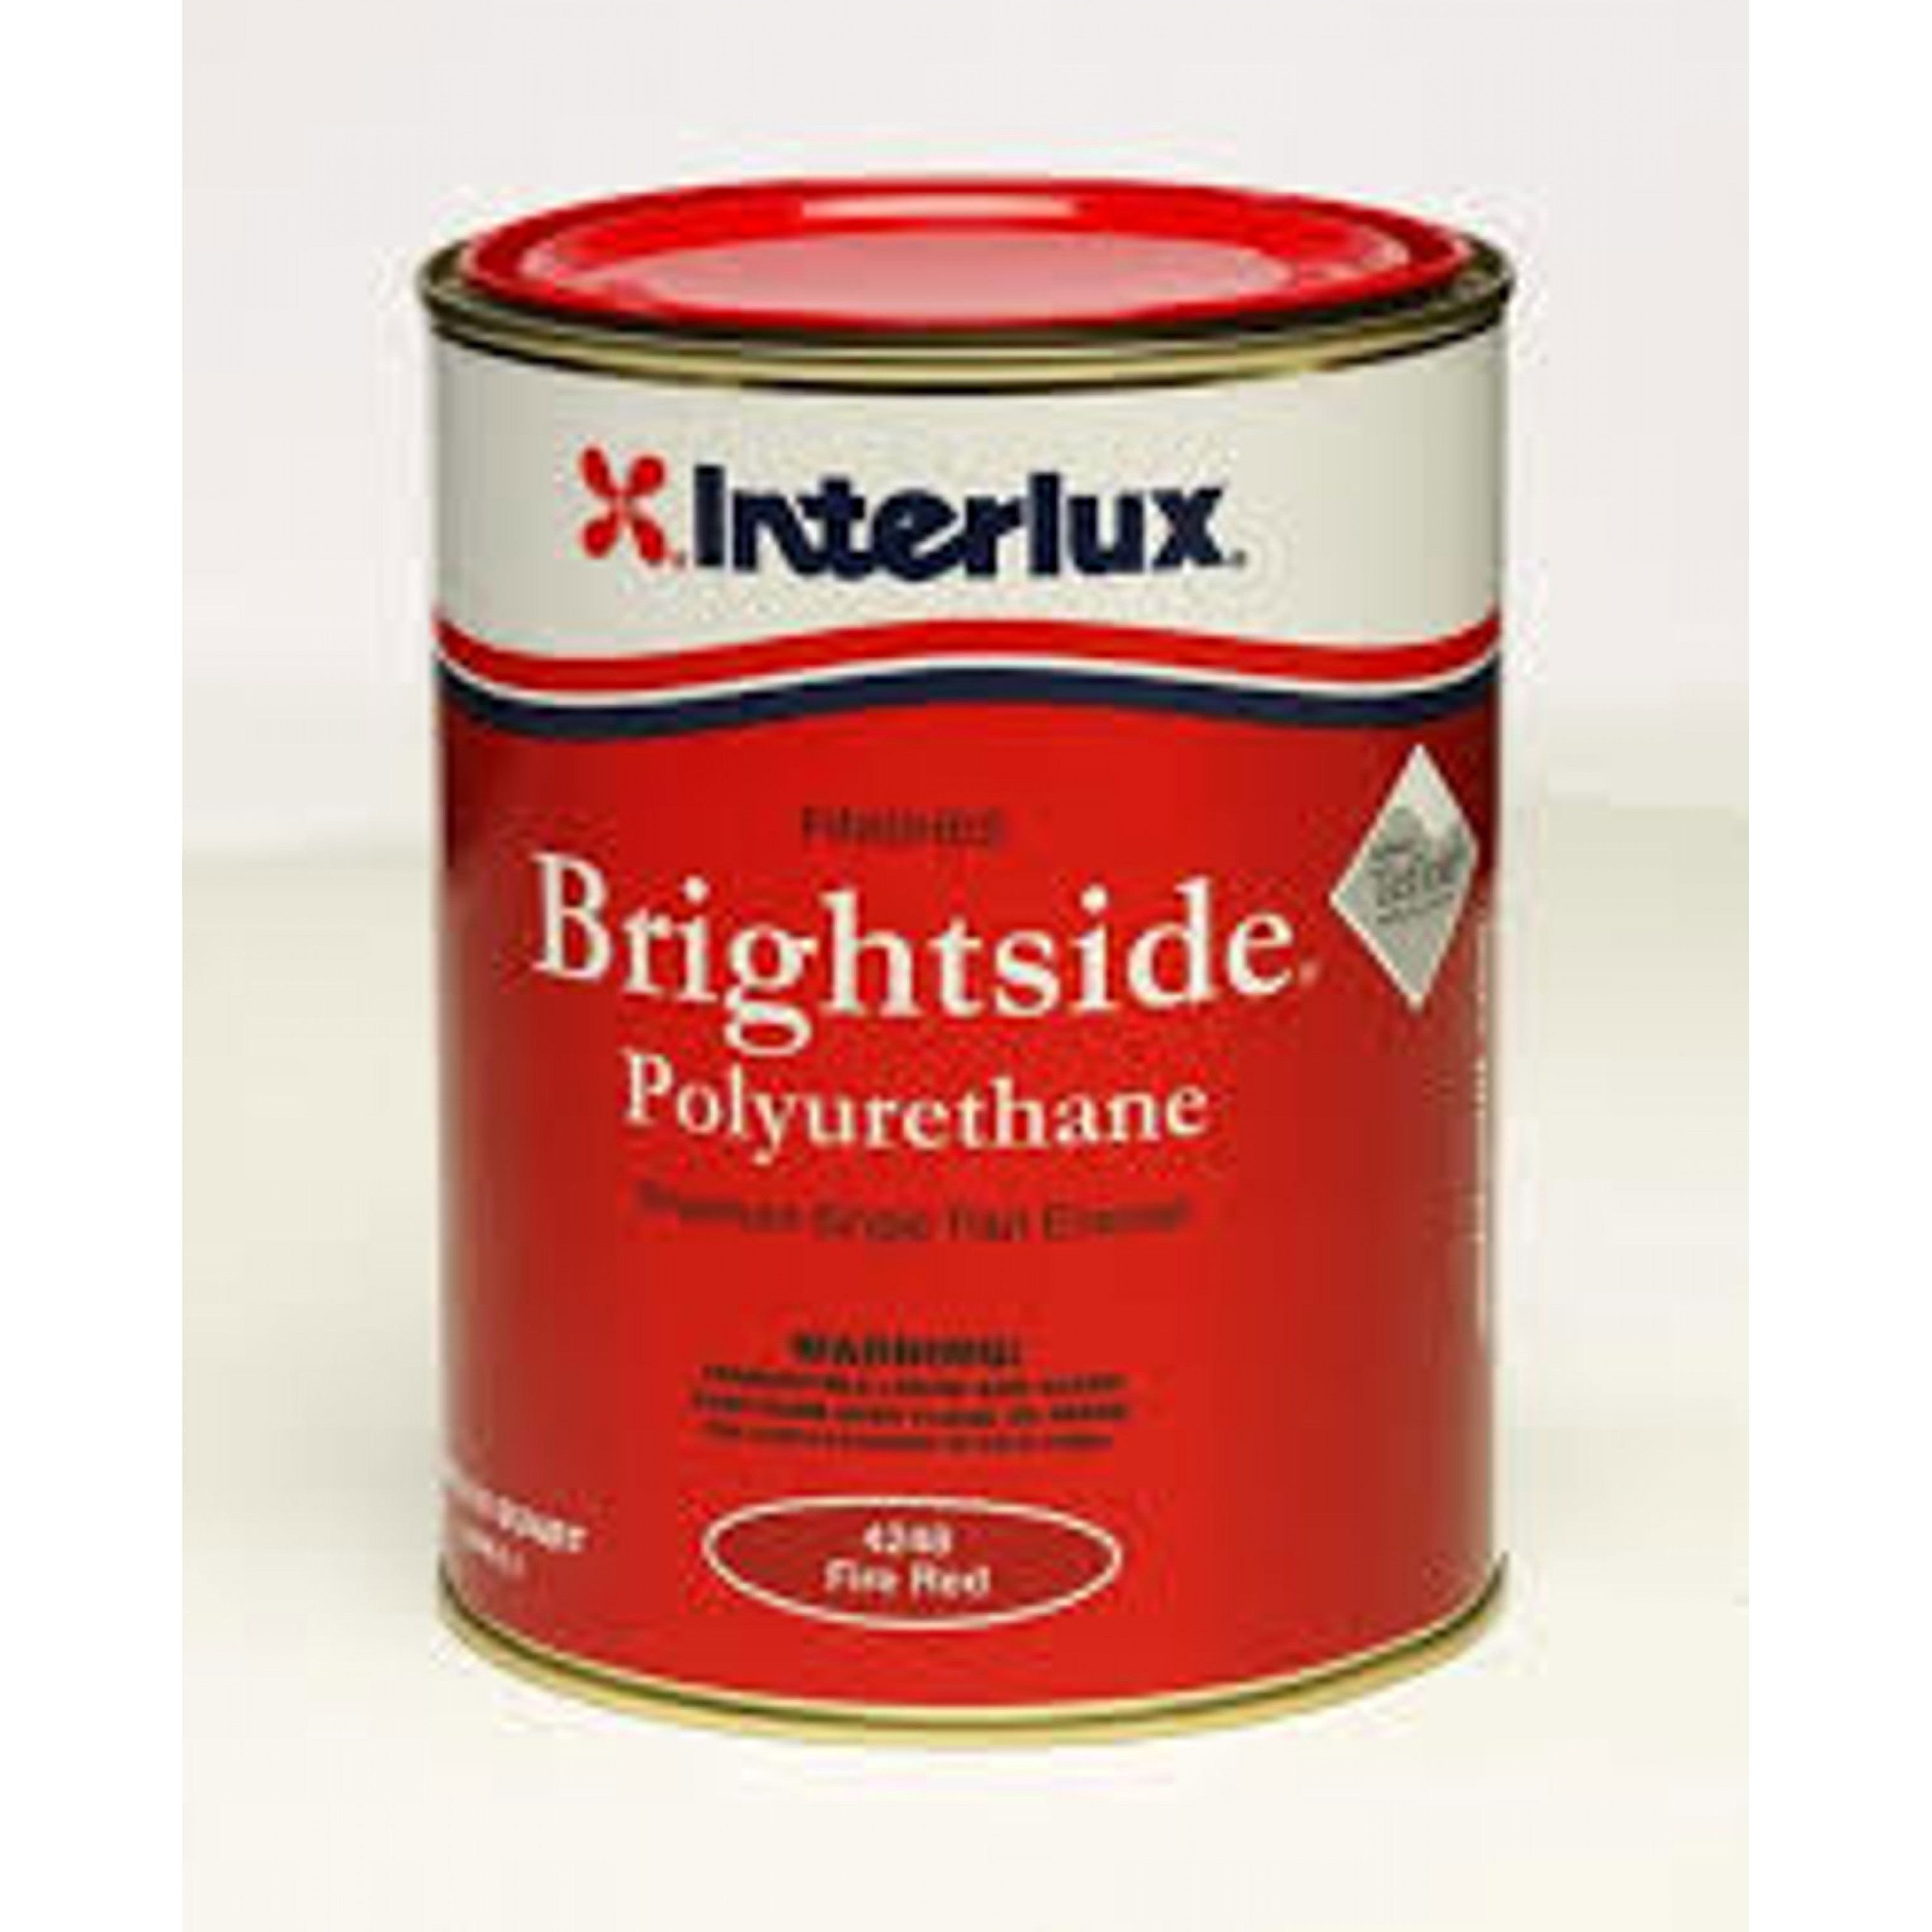 INTERLUX BRIGHTSIDE FIRE RED 4248